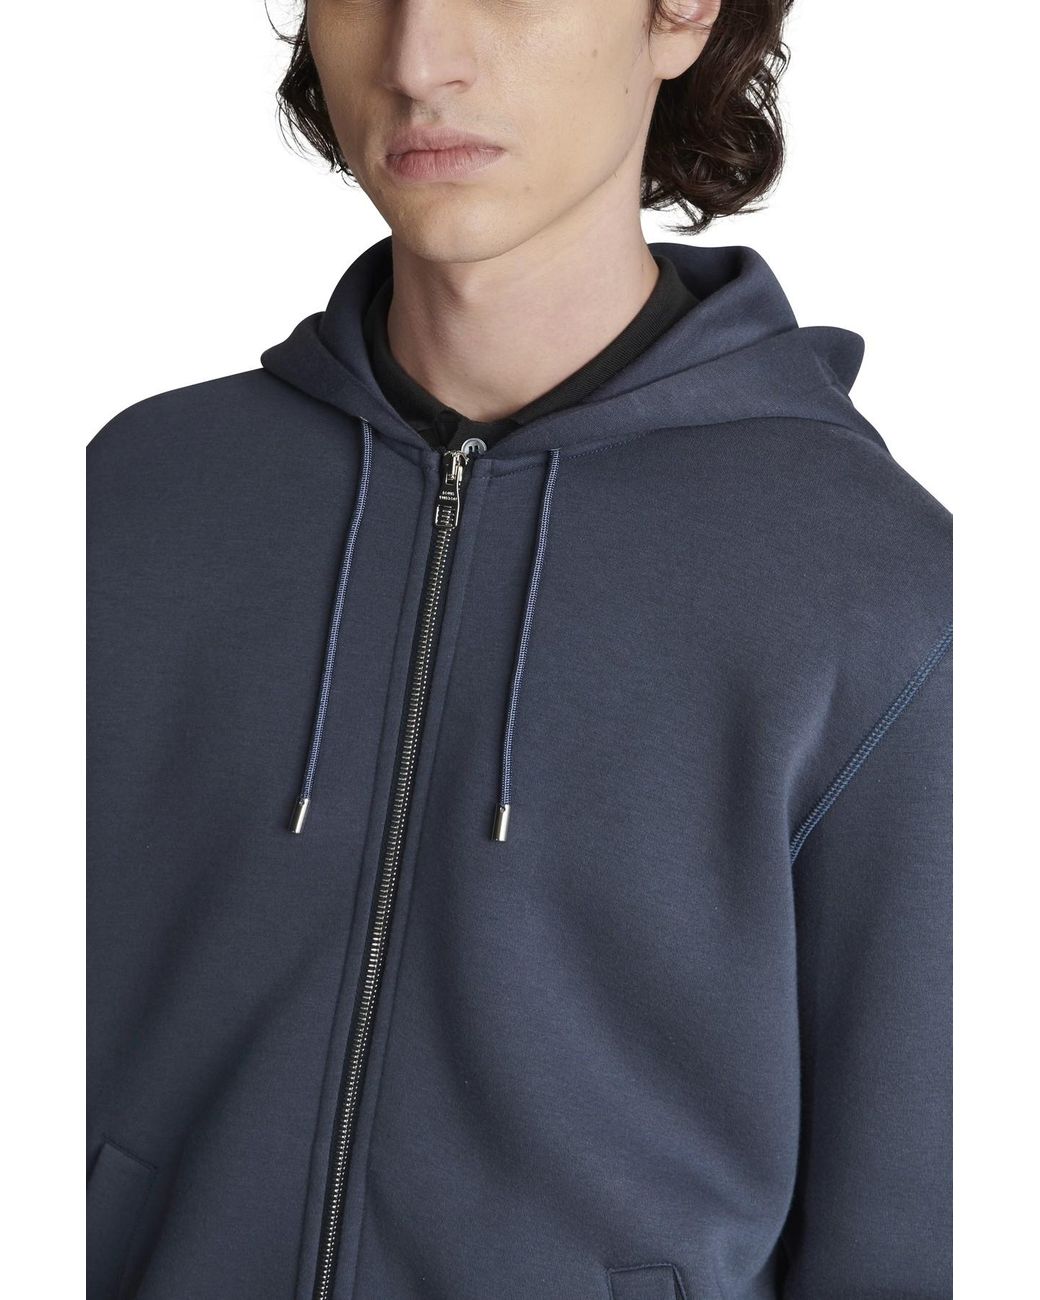 lv hoodie price